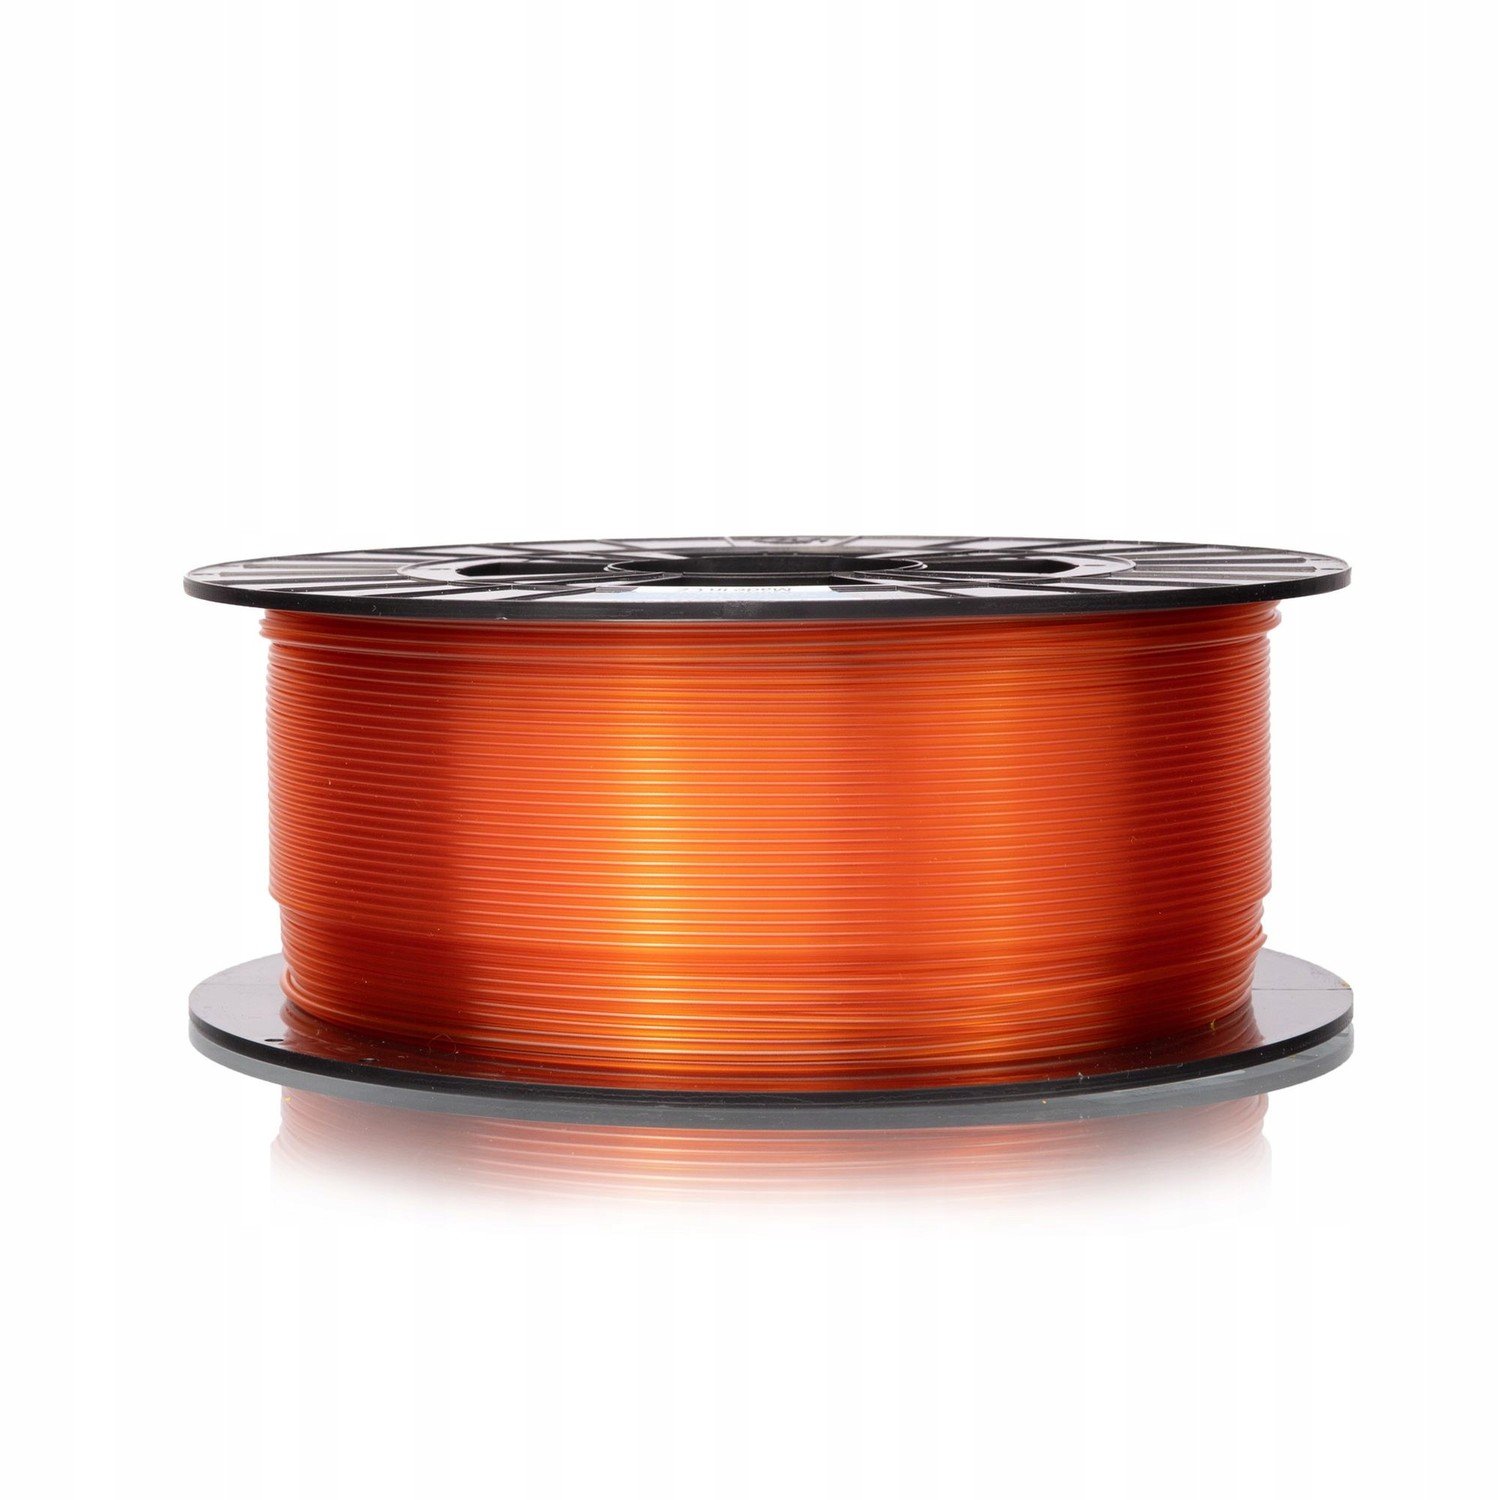 Filament-PM Petg transparentní oranžová 1,75mm 1kg